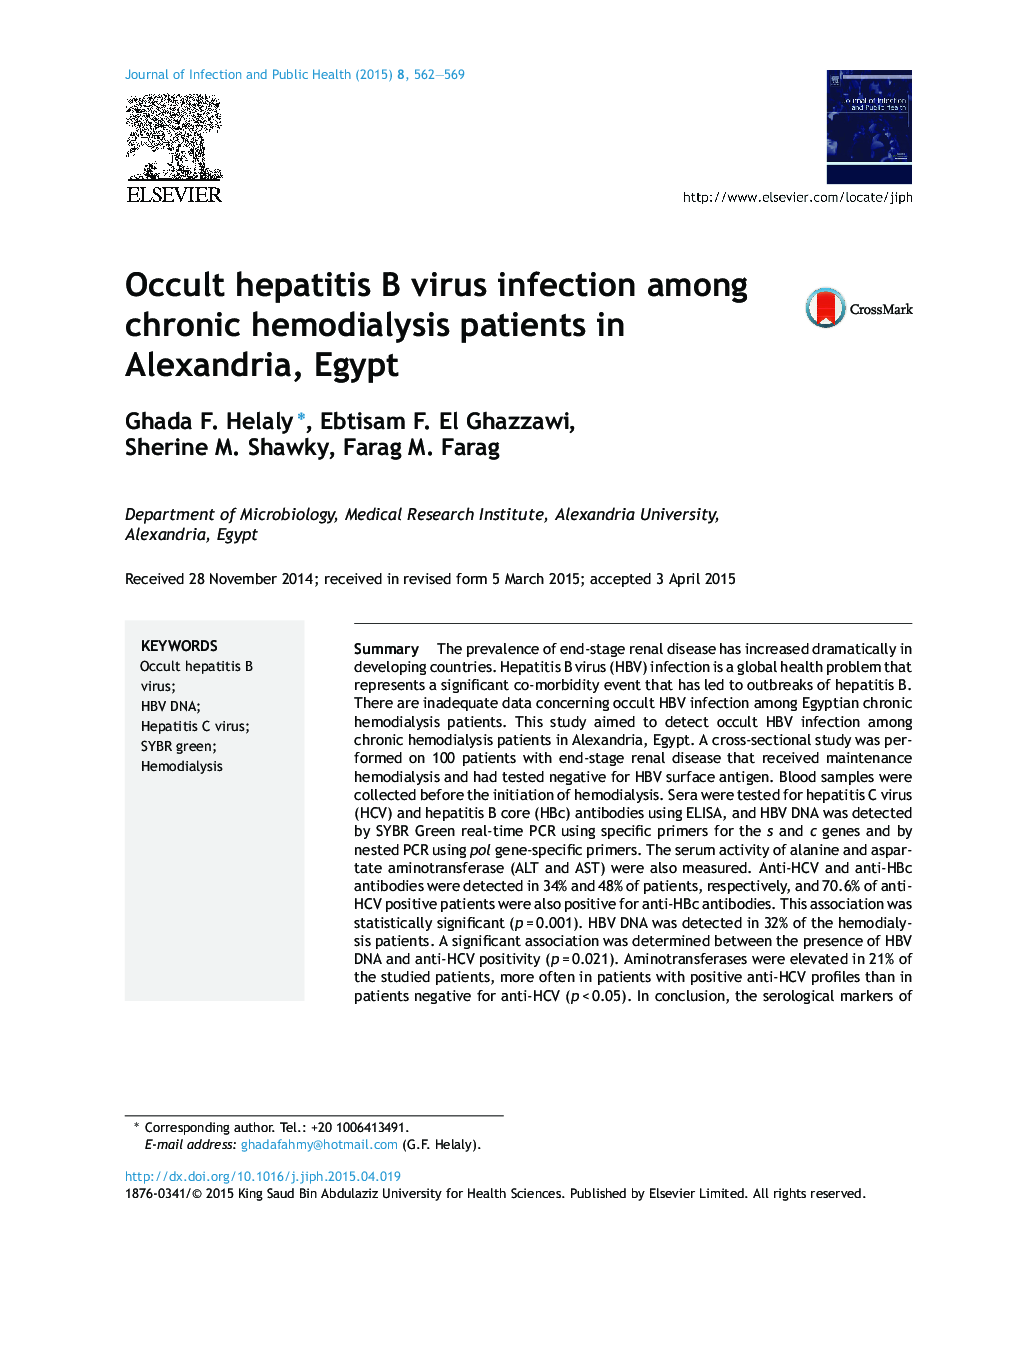 Occult hepatitis B virus infection among chronic hemodialysis patients in Alexandria, Egypt